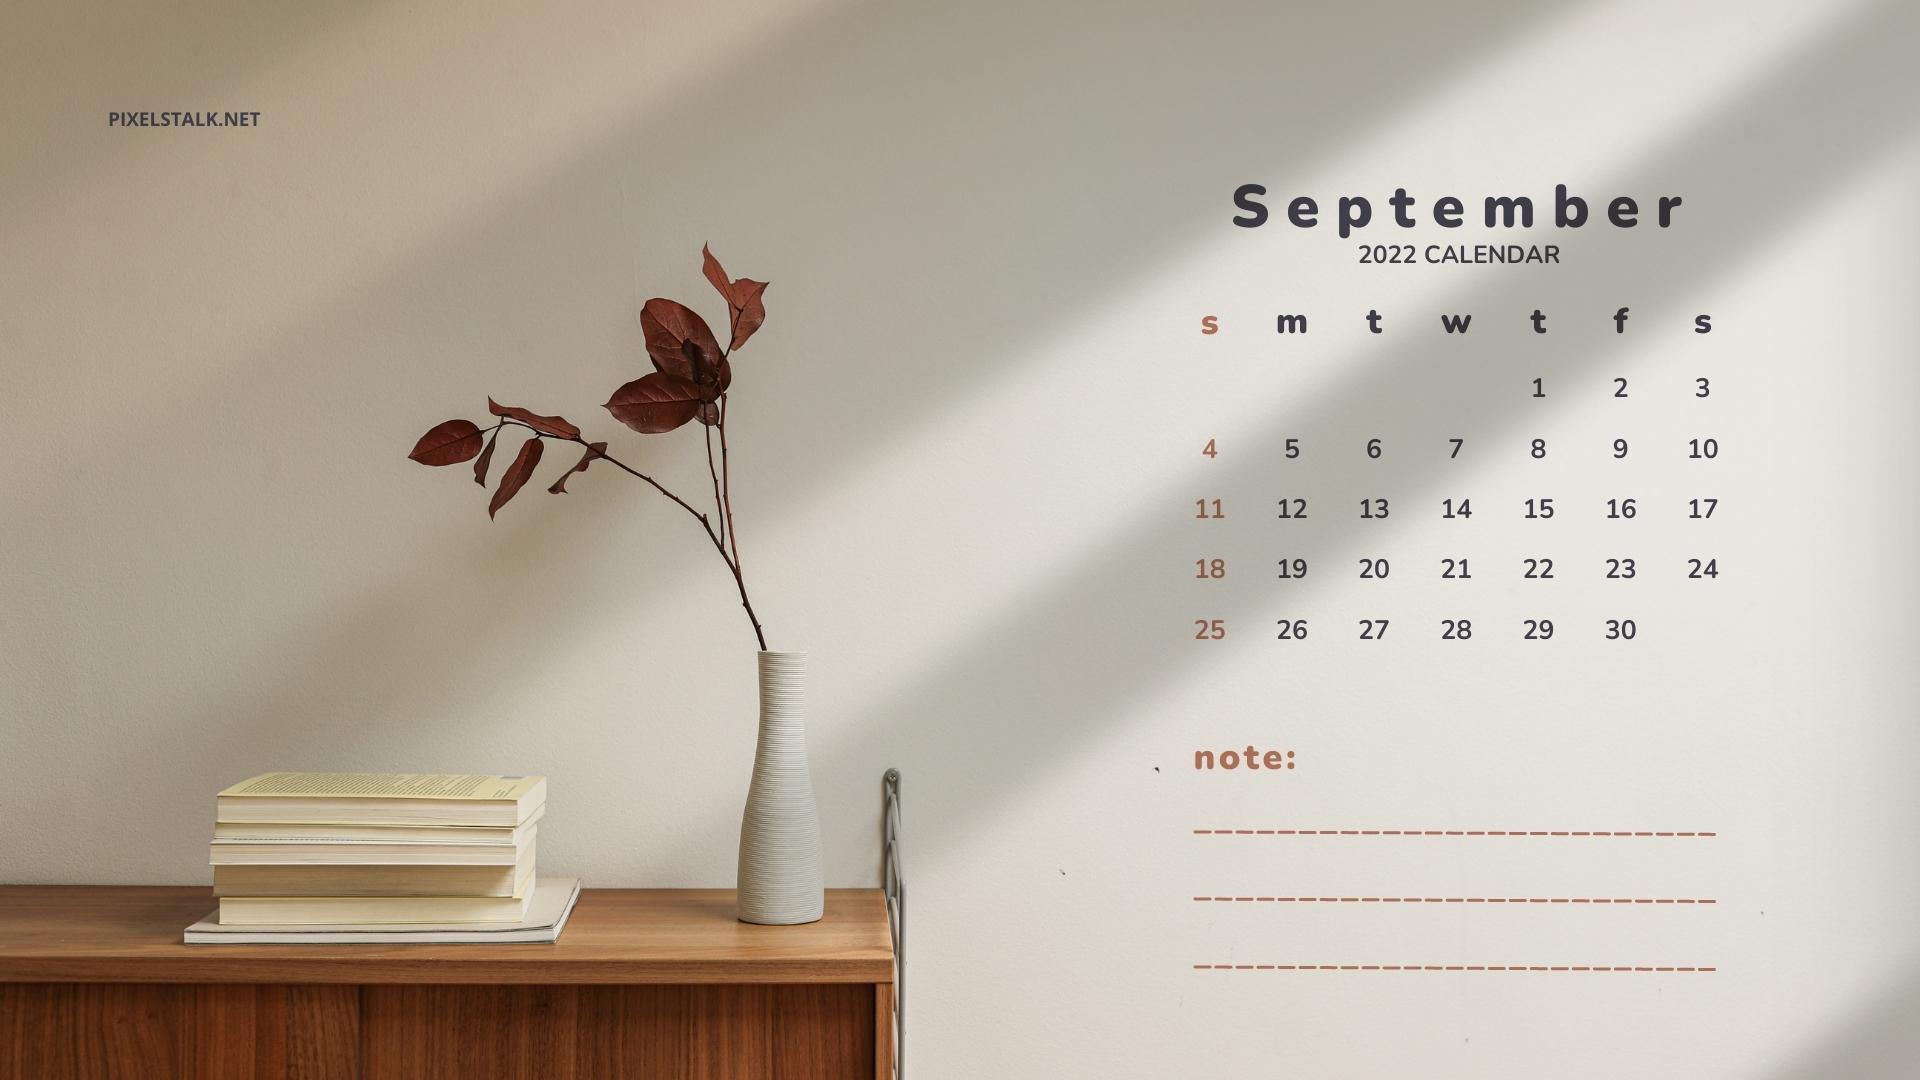 September 2022 Calendar Wallpapers HD Free Download